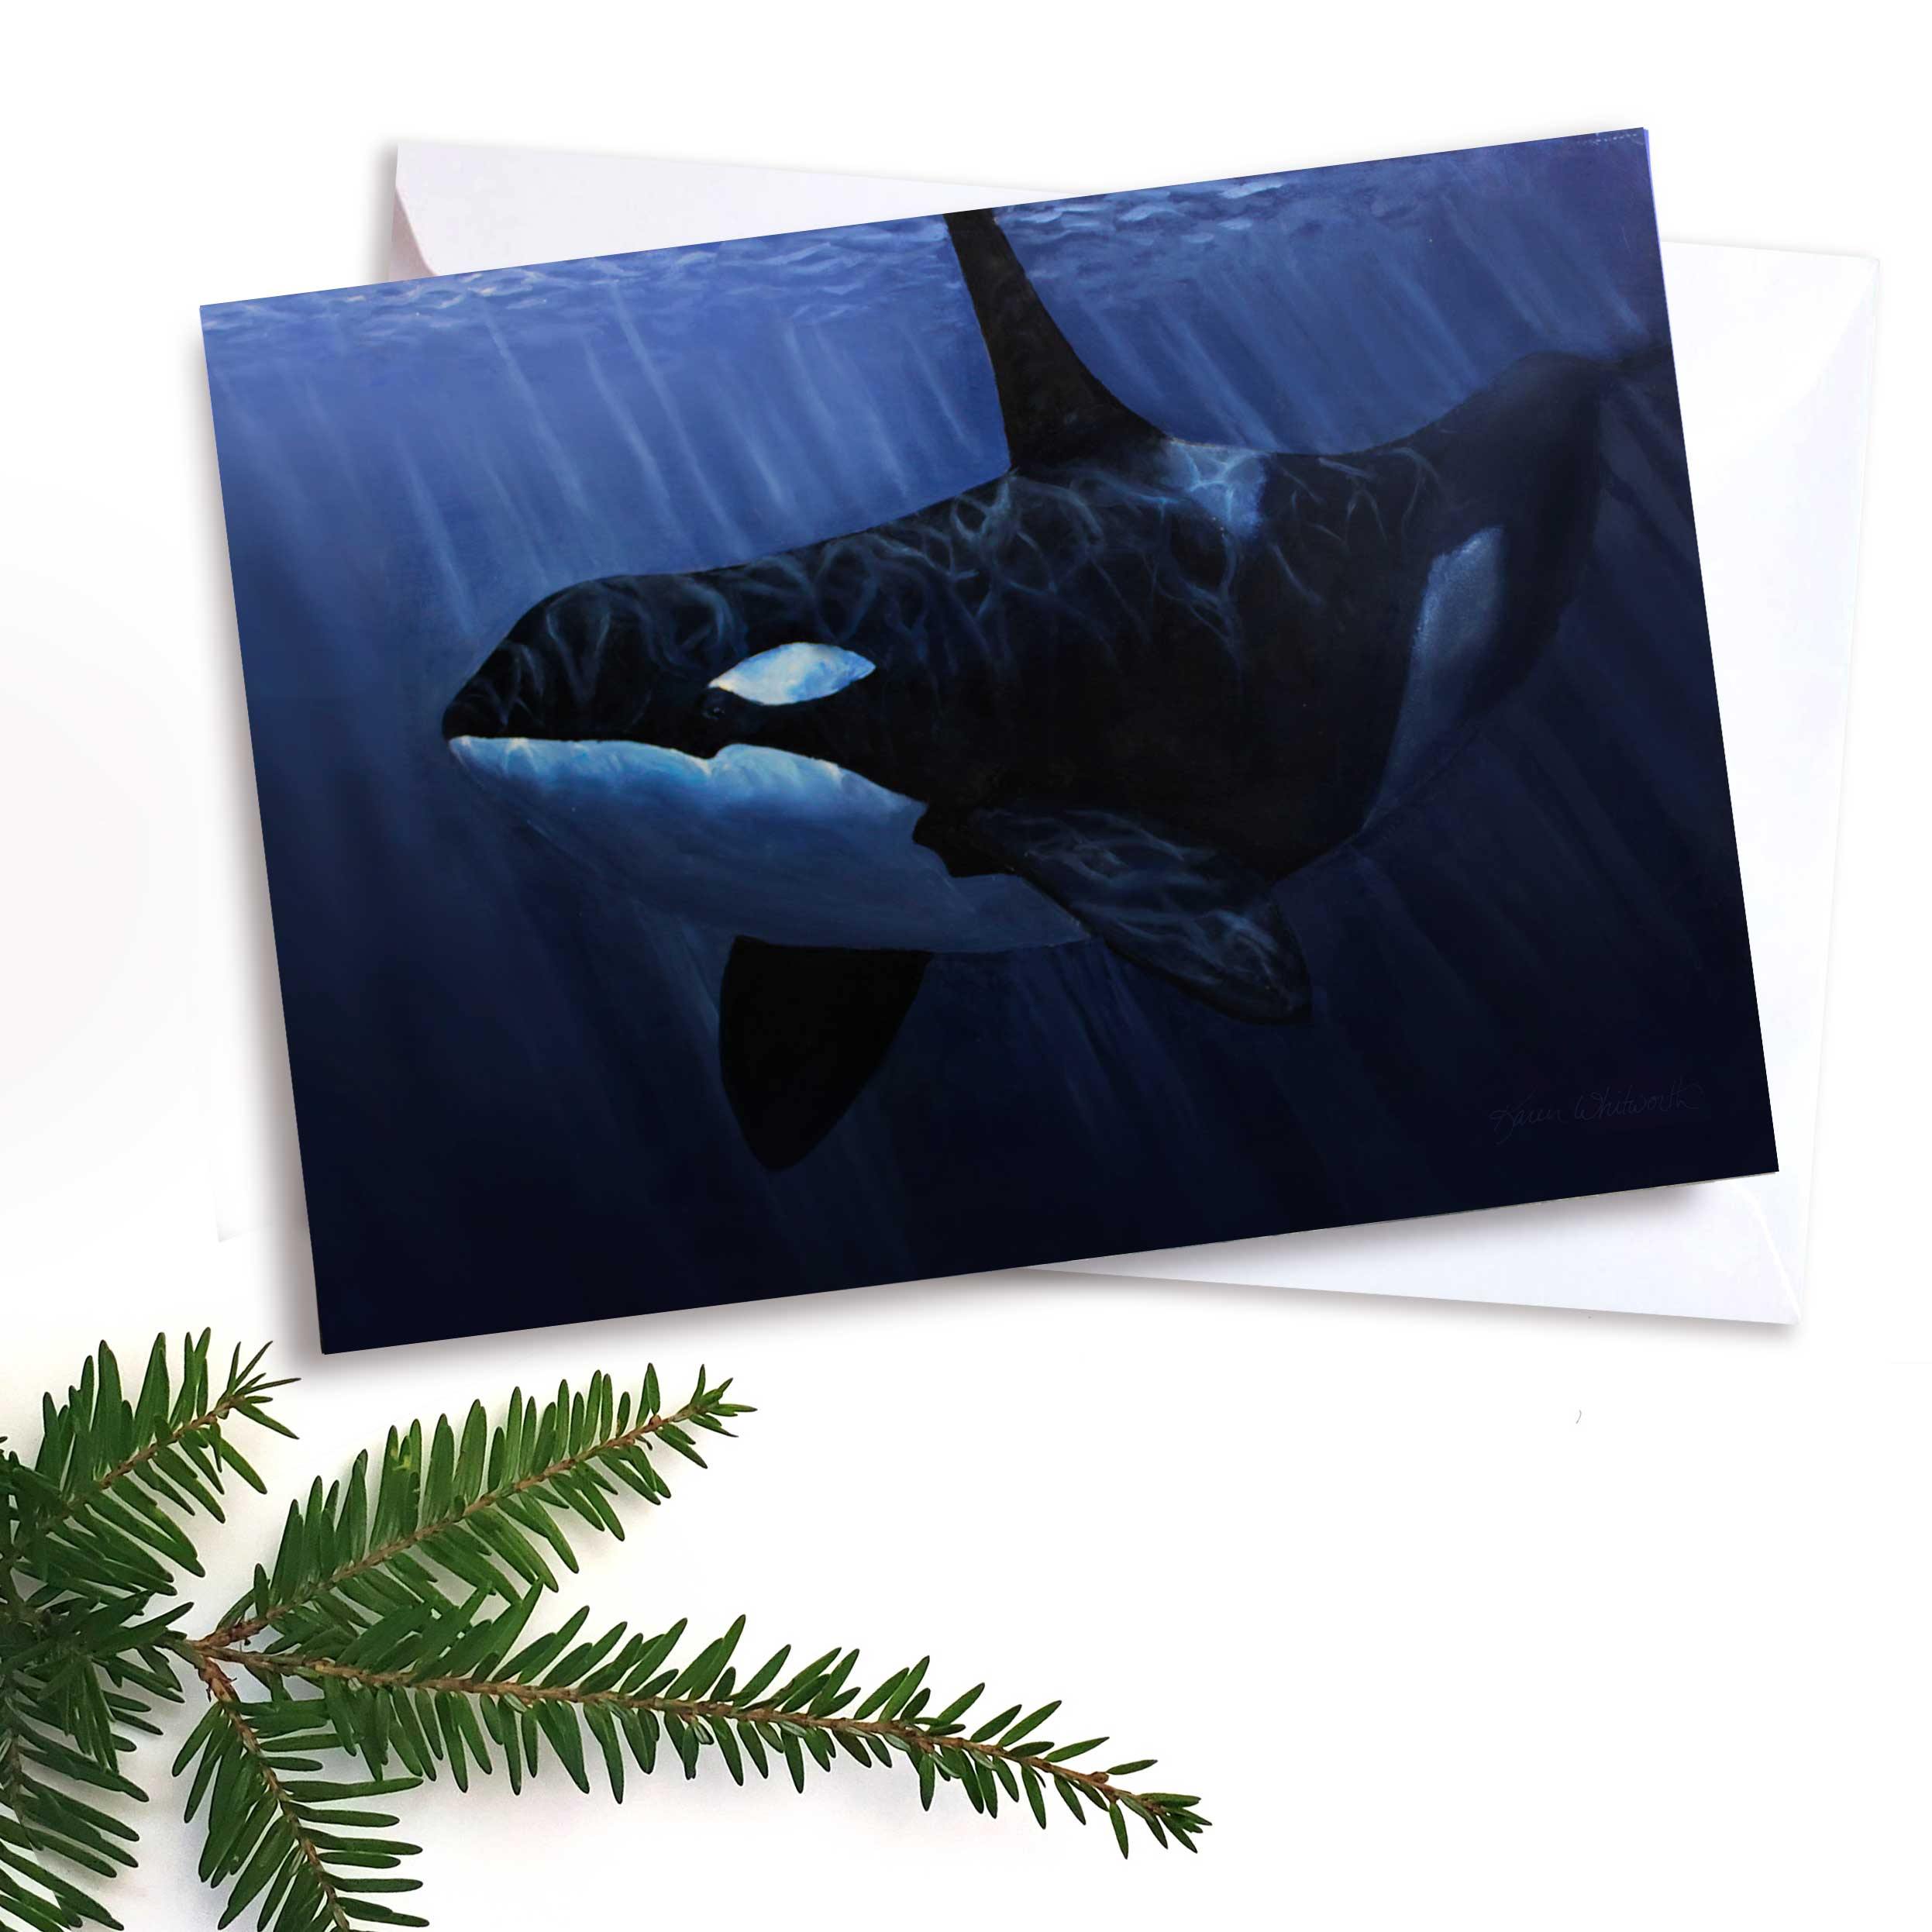 Orca Killer Whale in the blue ocean greeting card by Alaska artist Karen Whitworth.